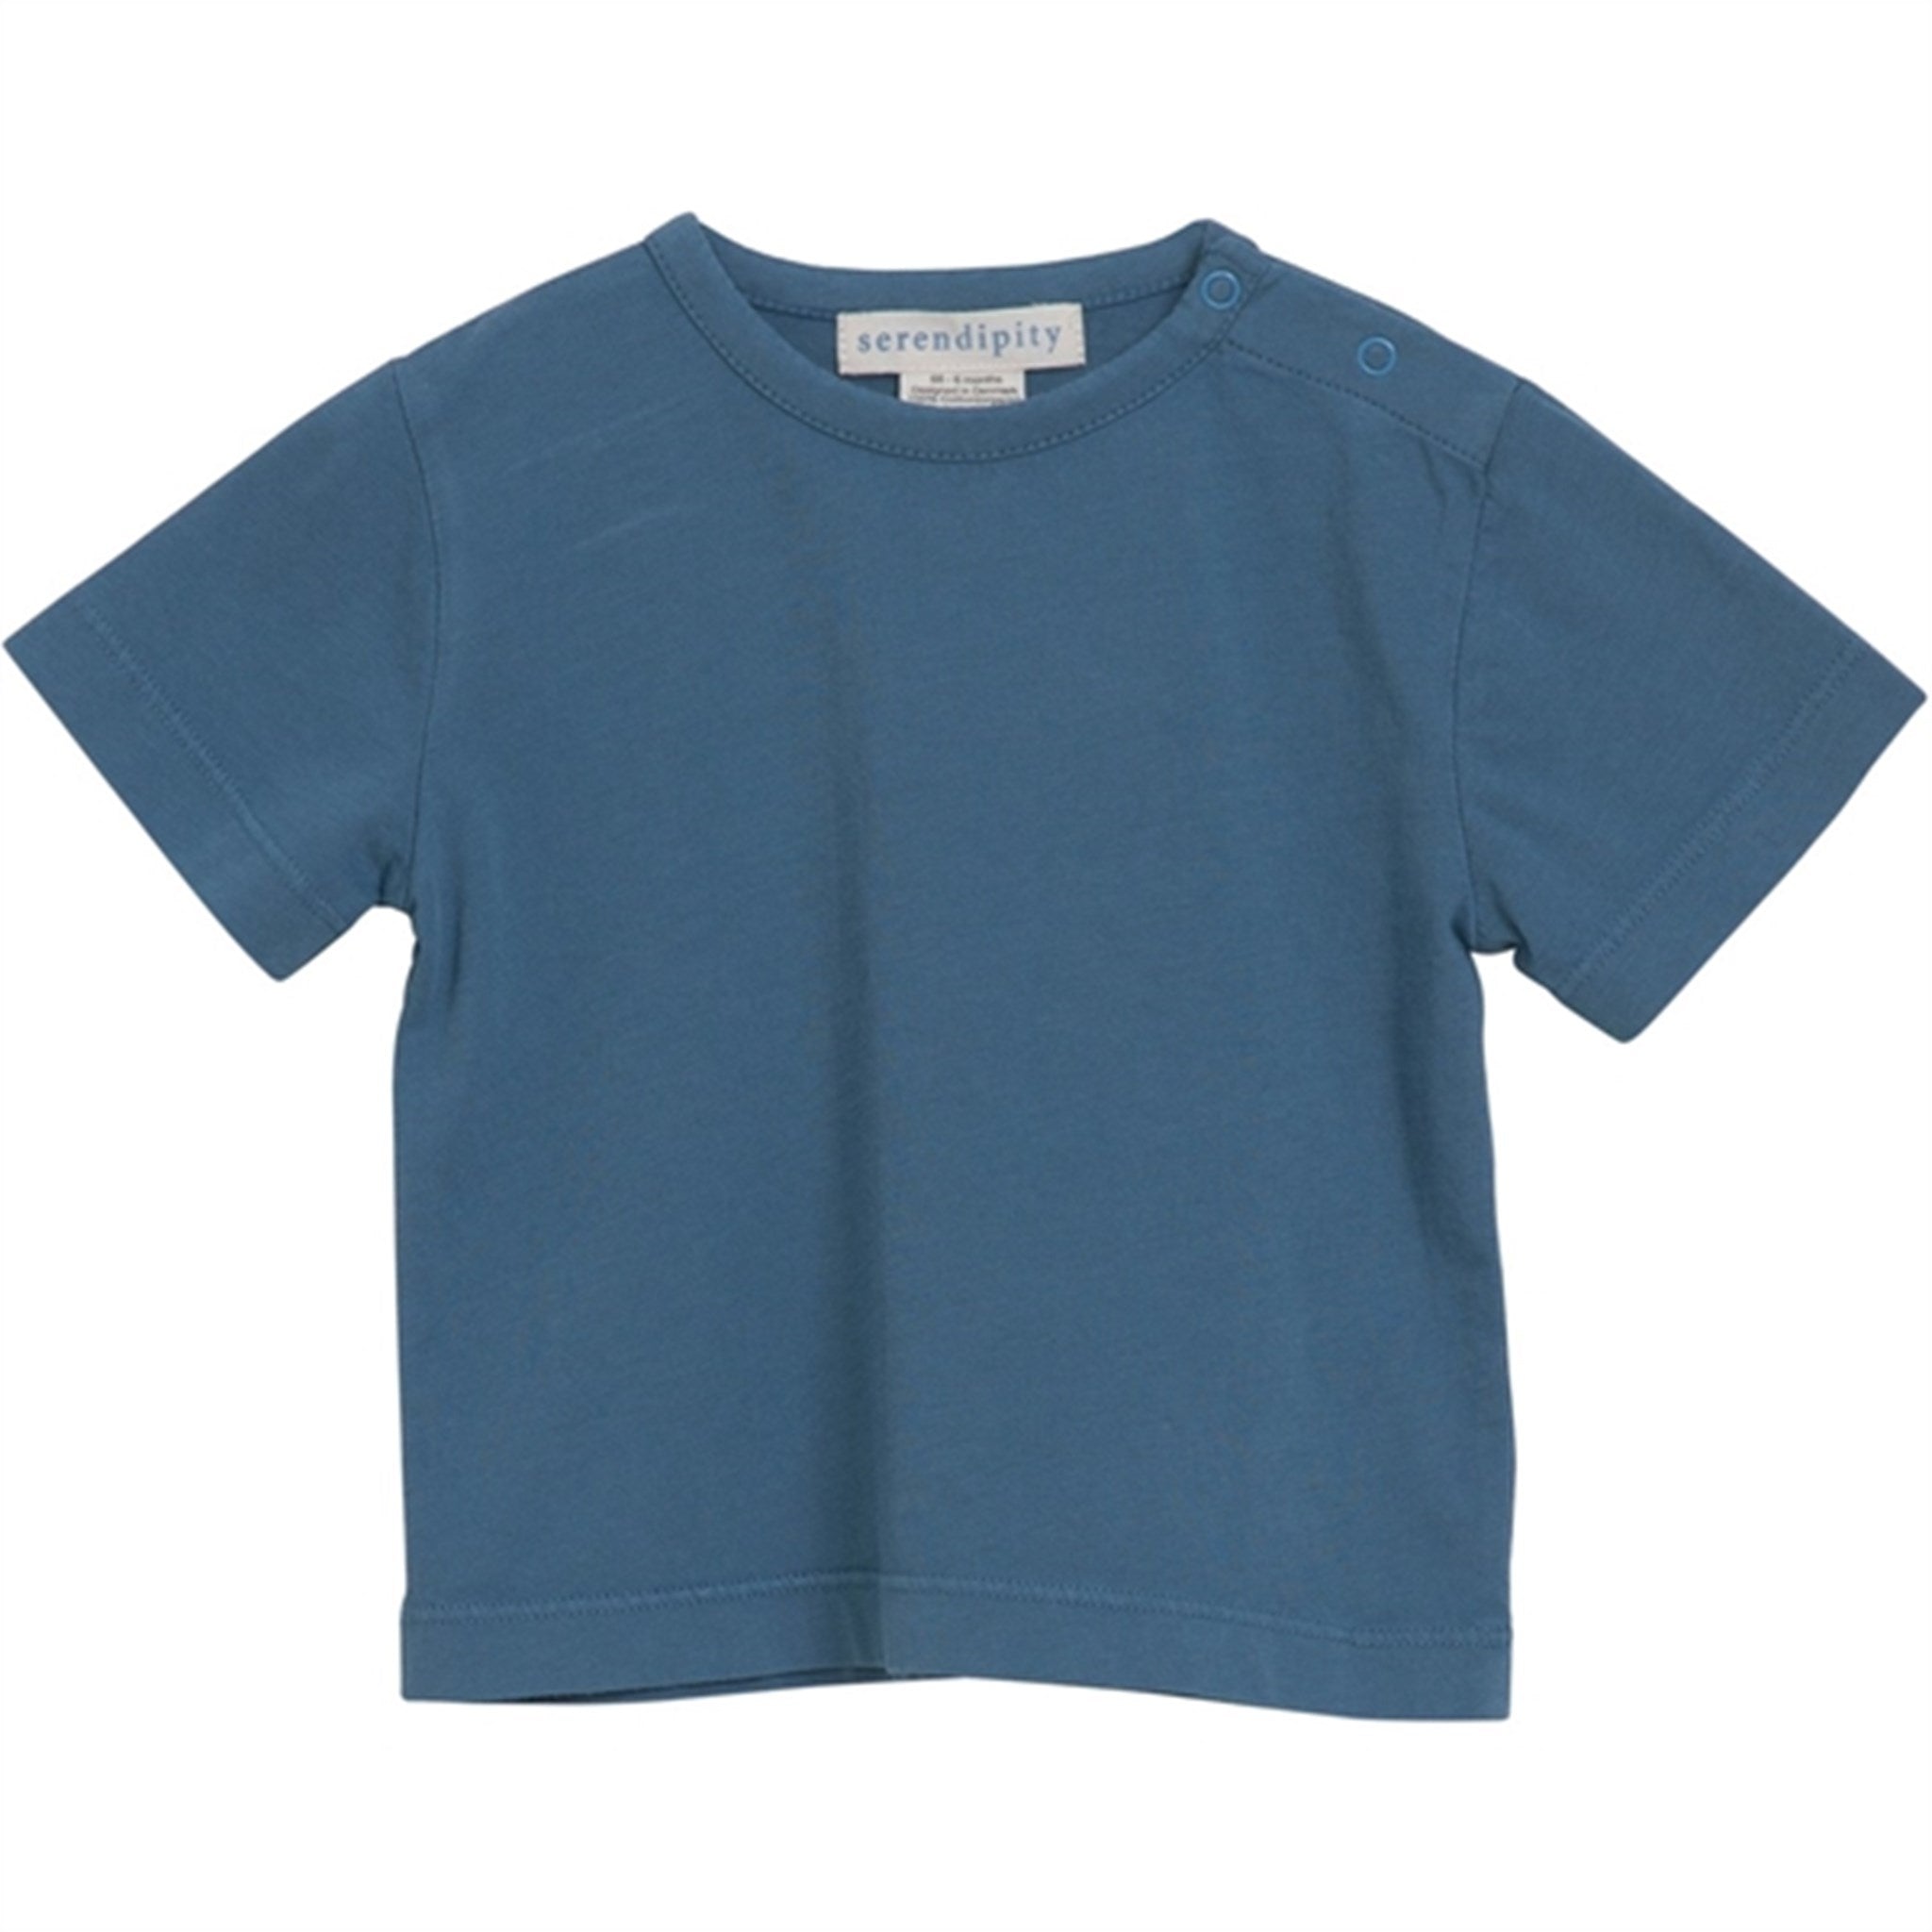 Serendipity Pale Blue Baby Jersey T-shirt